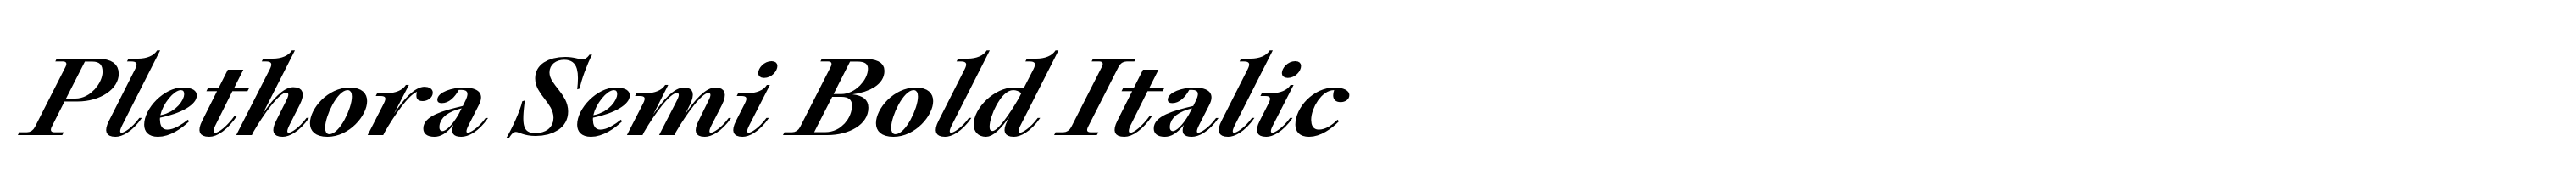 Plethora Semi Bold Italic